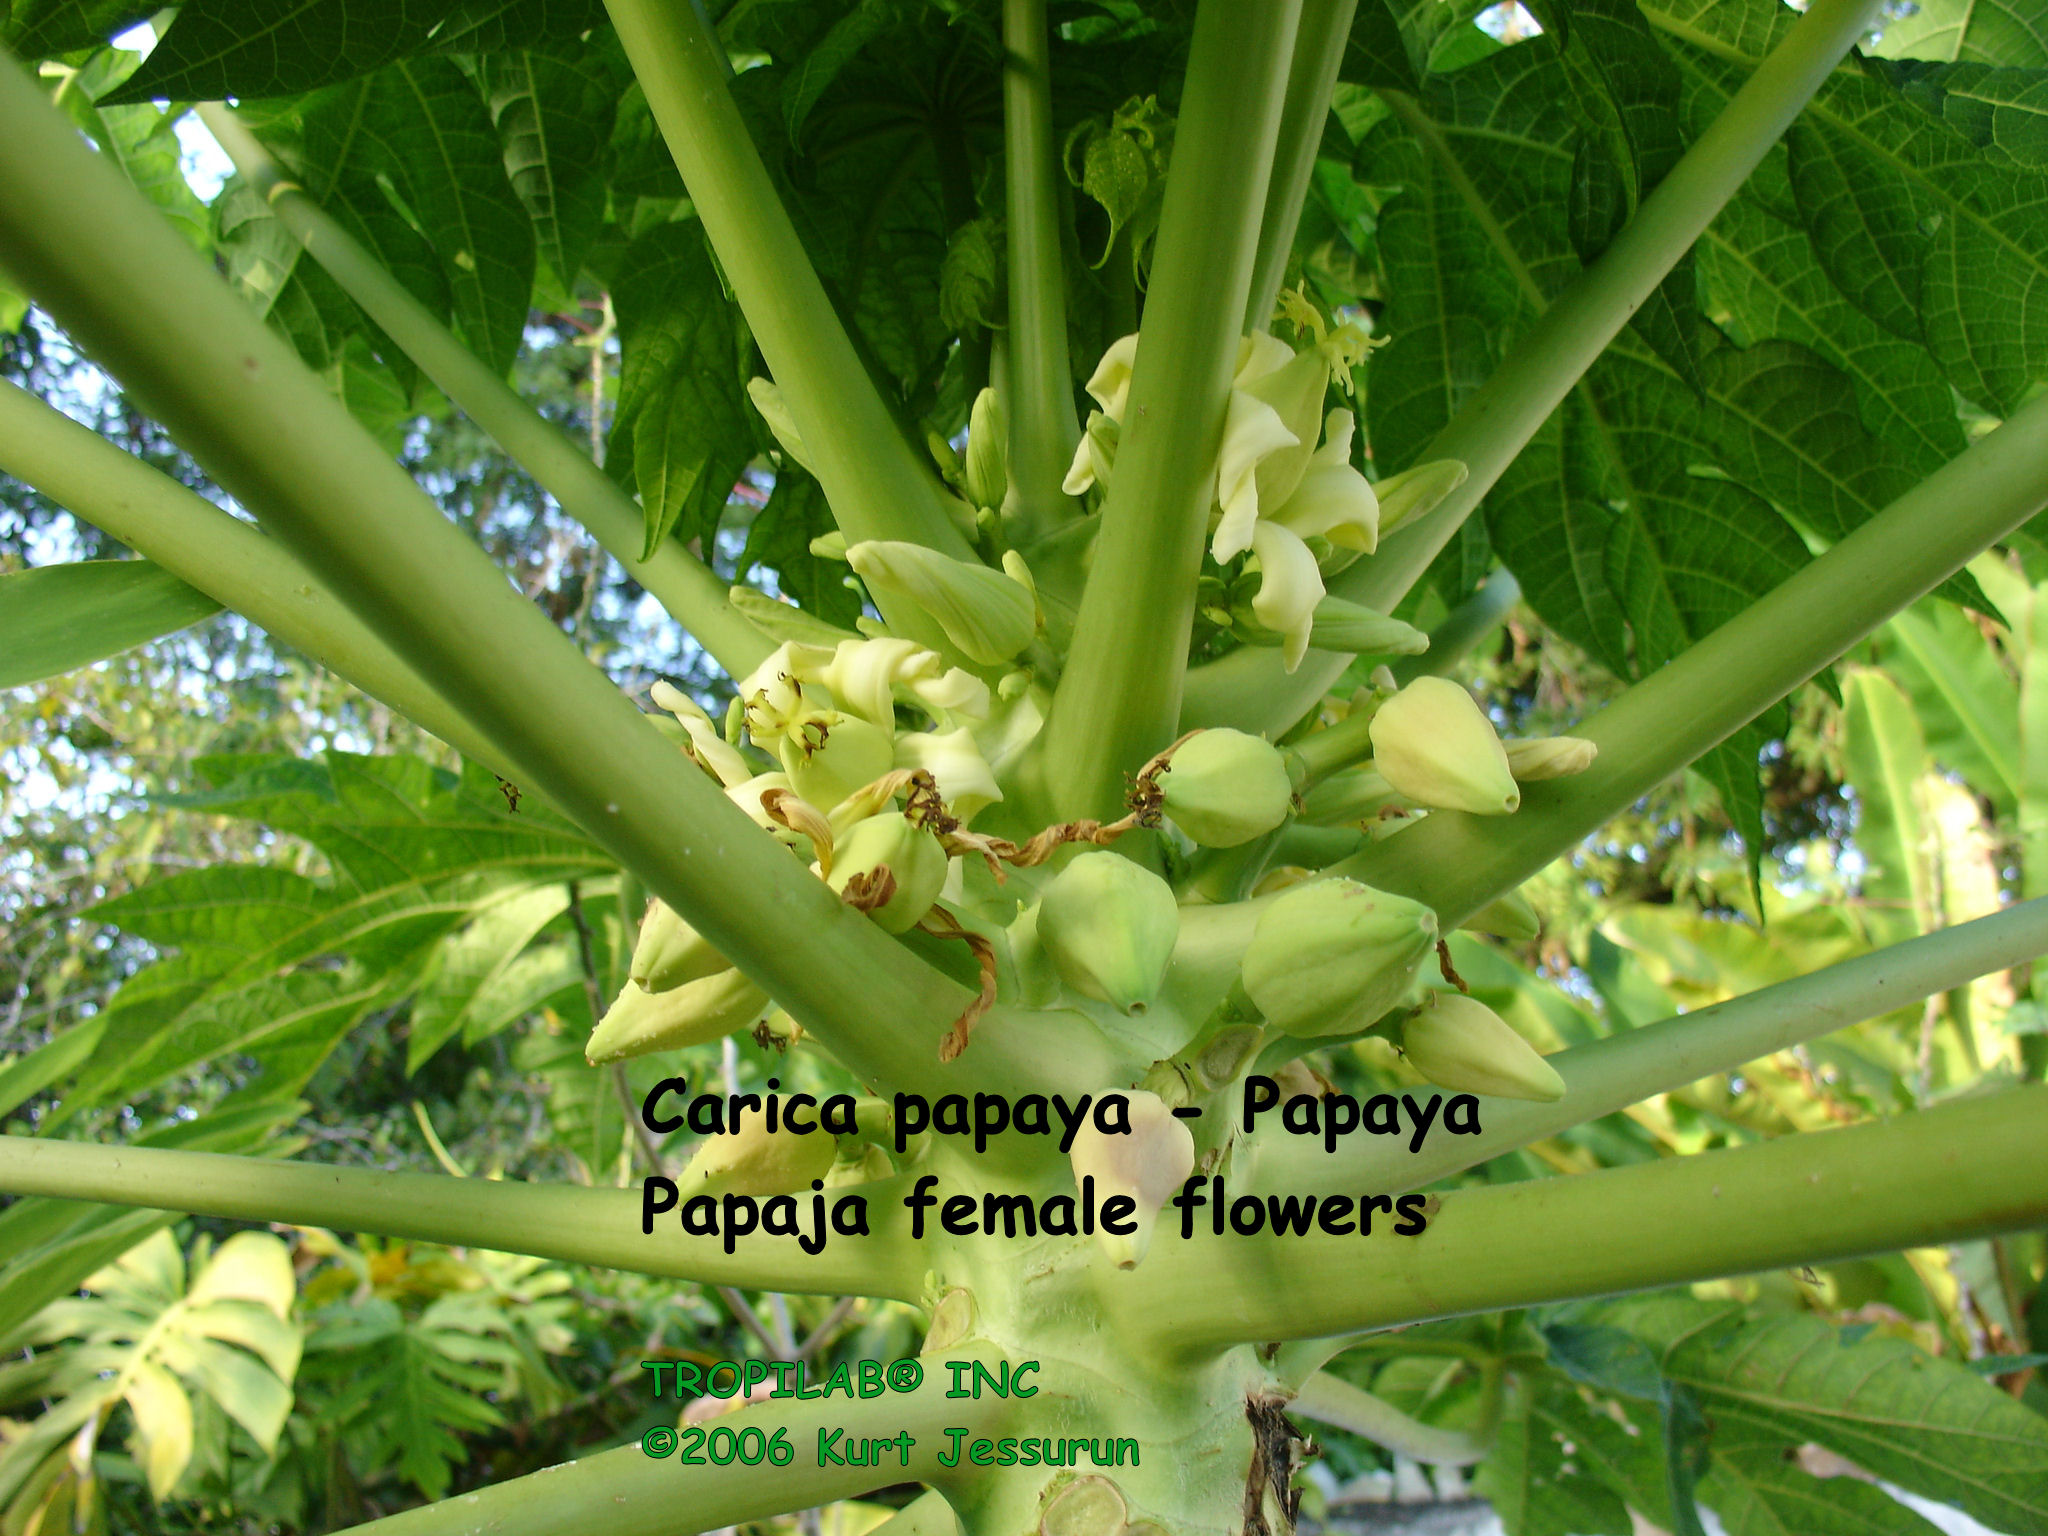 Carica papaya (Papaya) female flowers